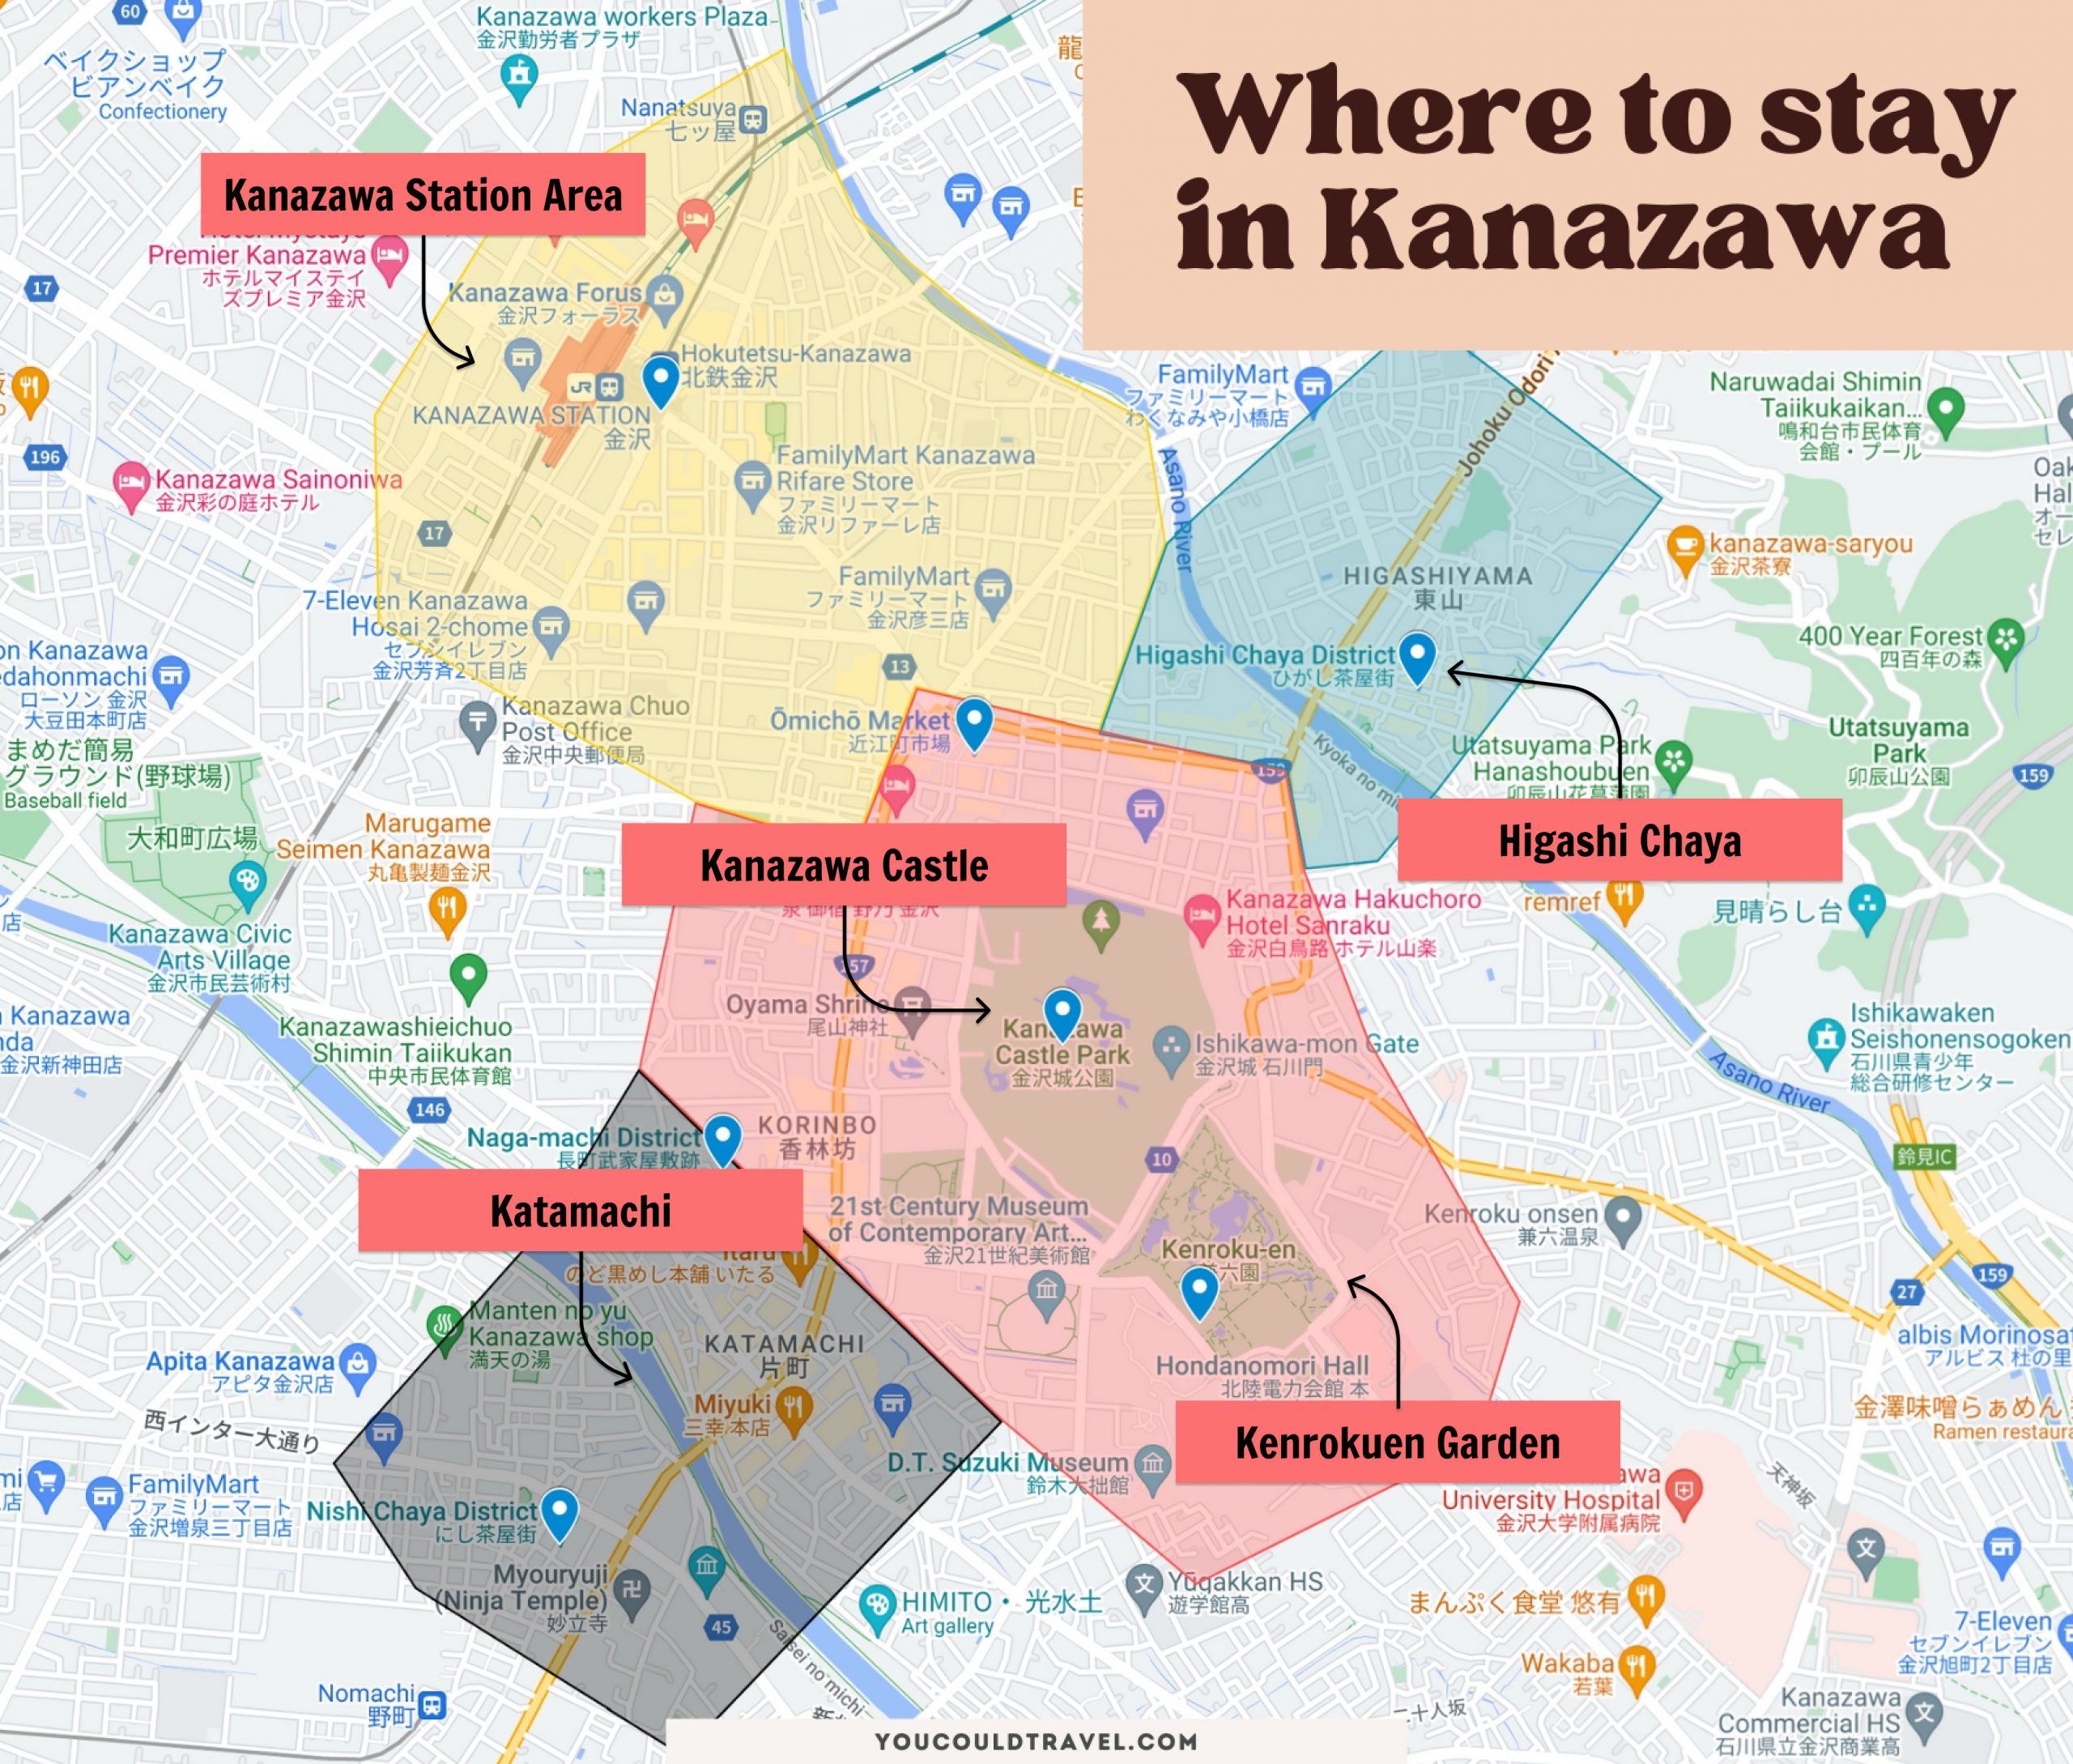 Where to stay in Kanazawa - Neighbourhood Map